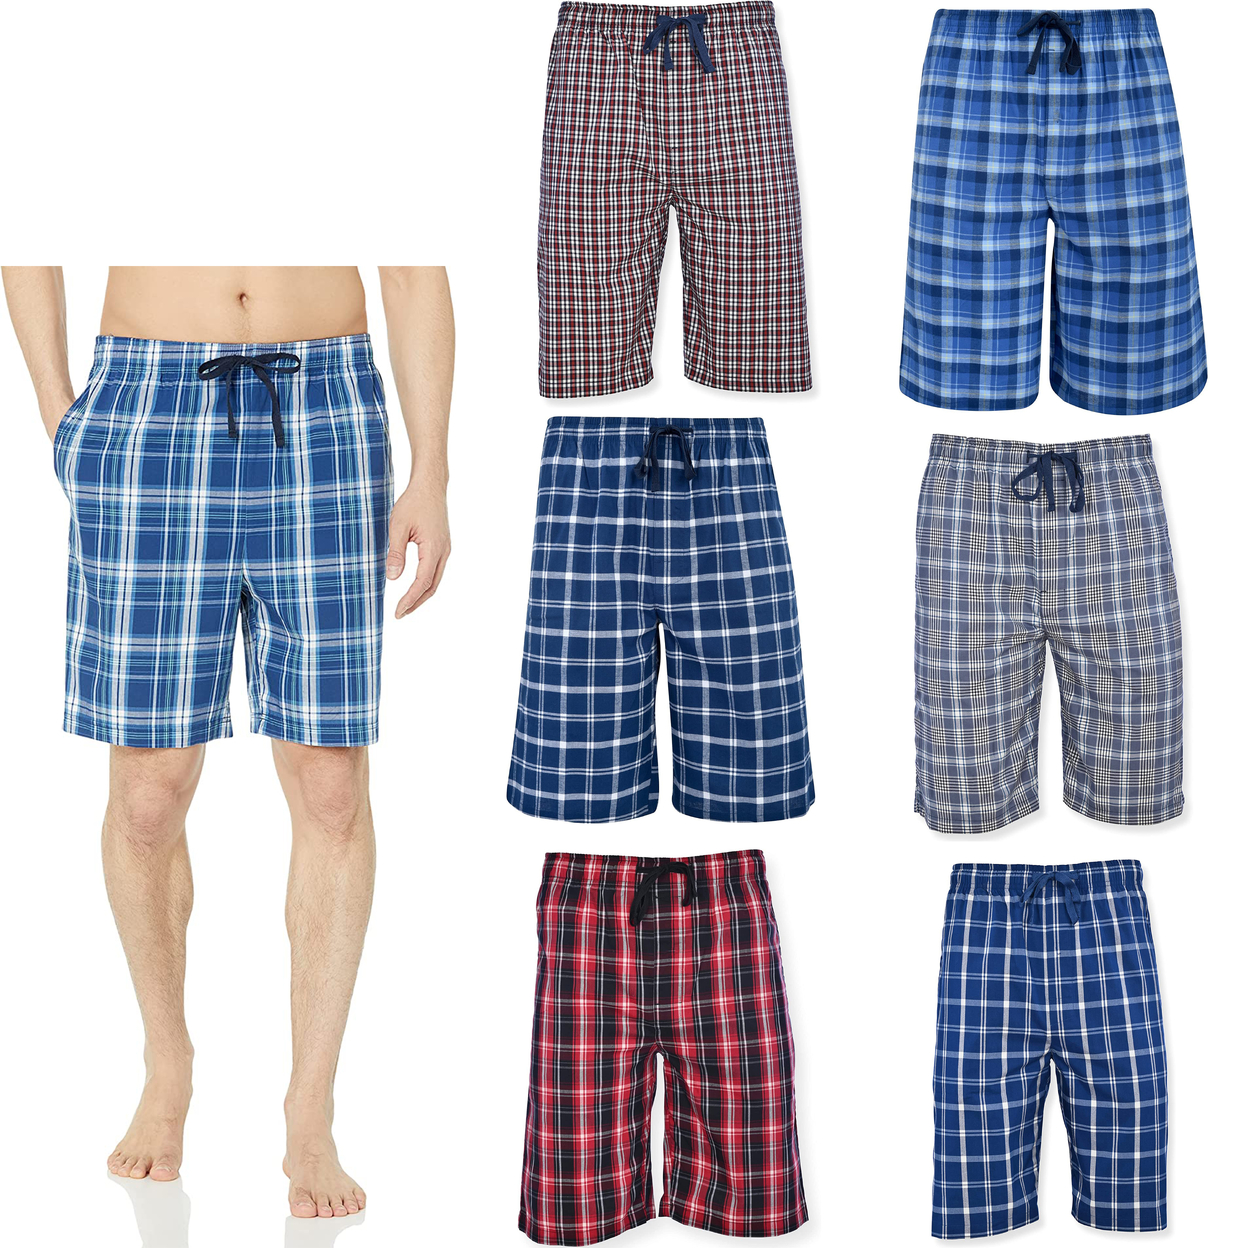 2-Pack: Men's Ultra Soft Plaid Lounge Pajama Sleep Wear Shorts - Red & Tan, Medium